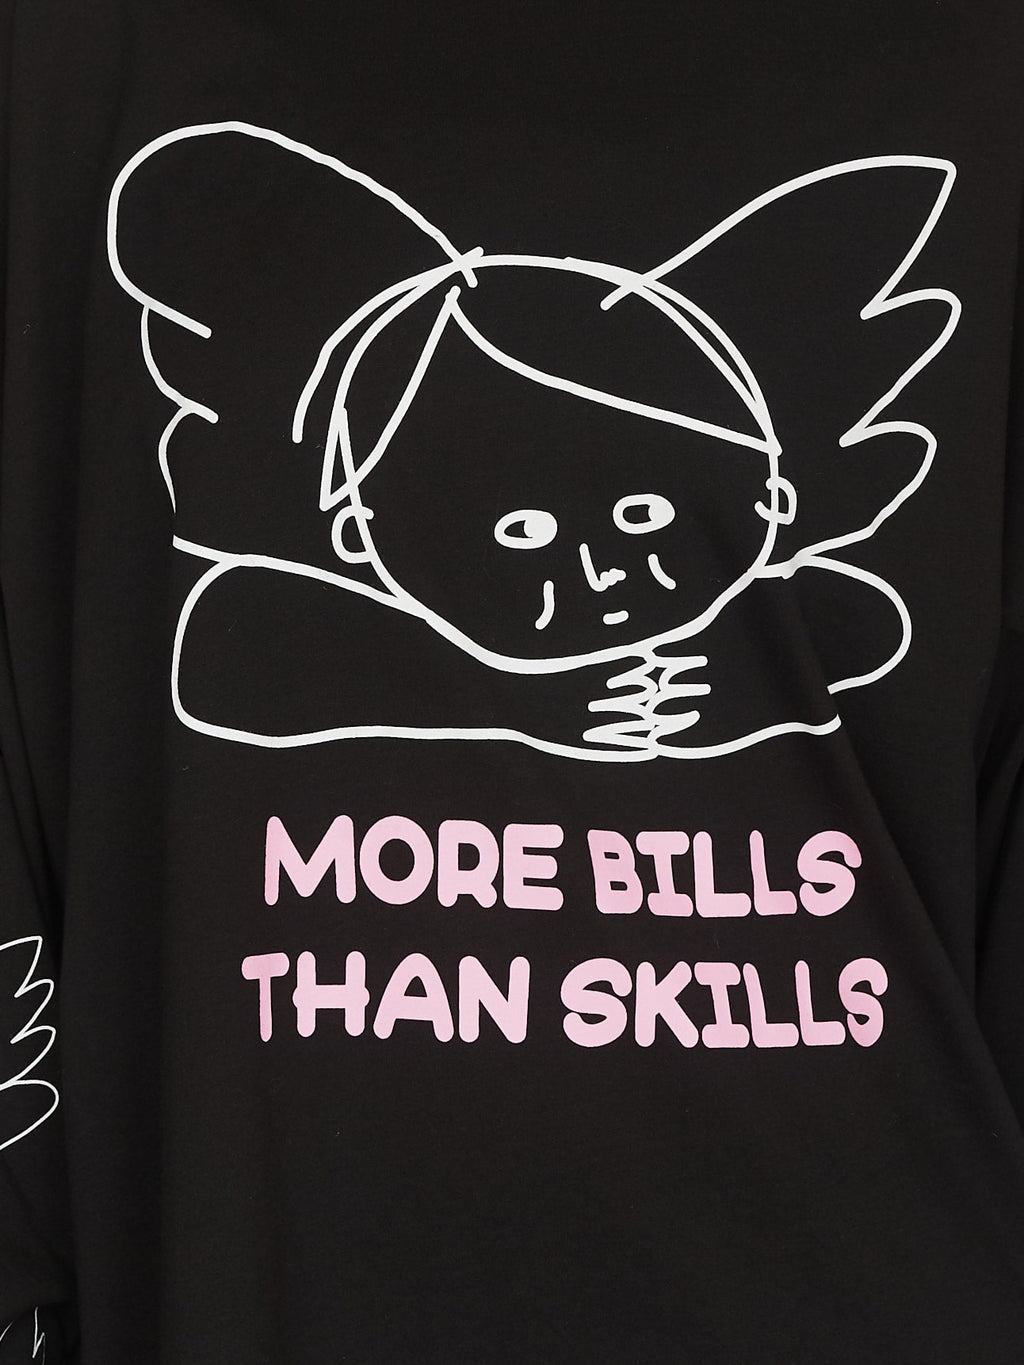 More Bills Than Skills Long-Sleeve T-Shirt